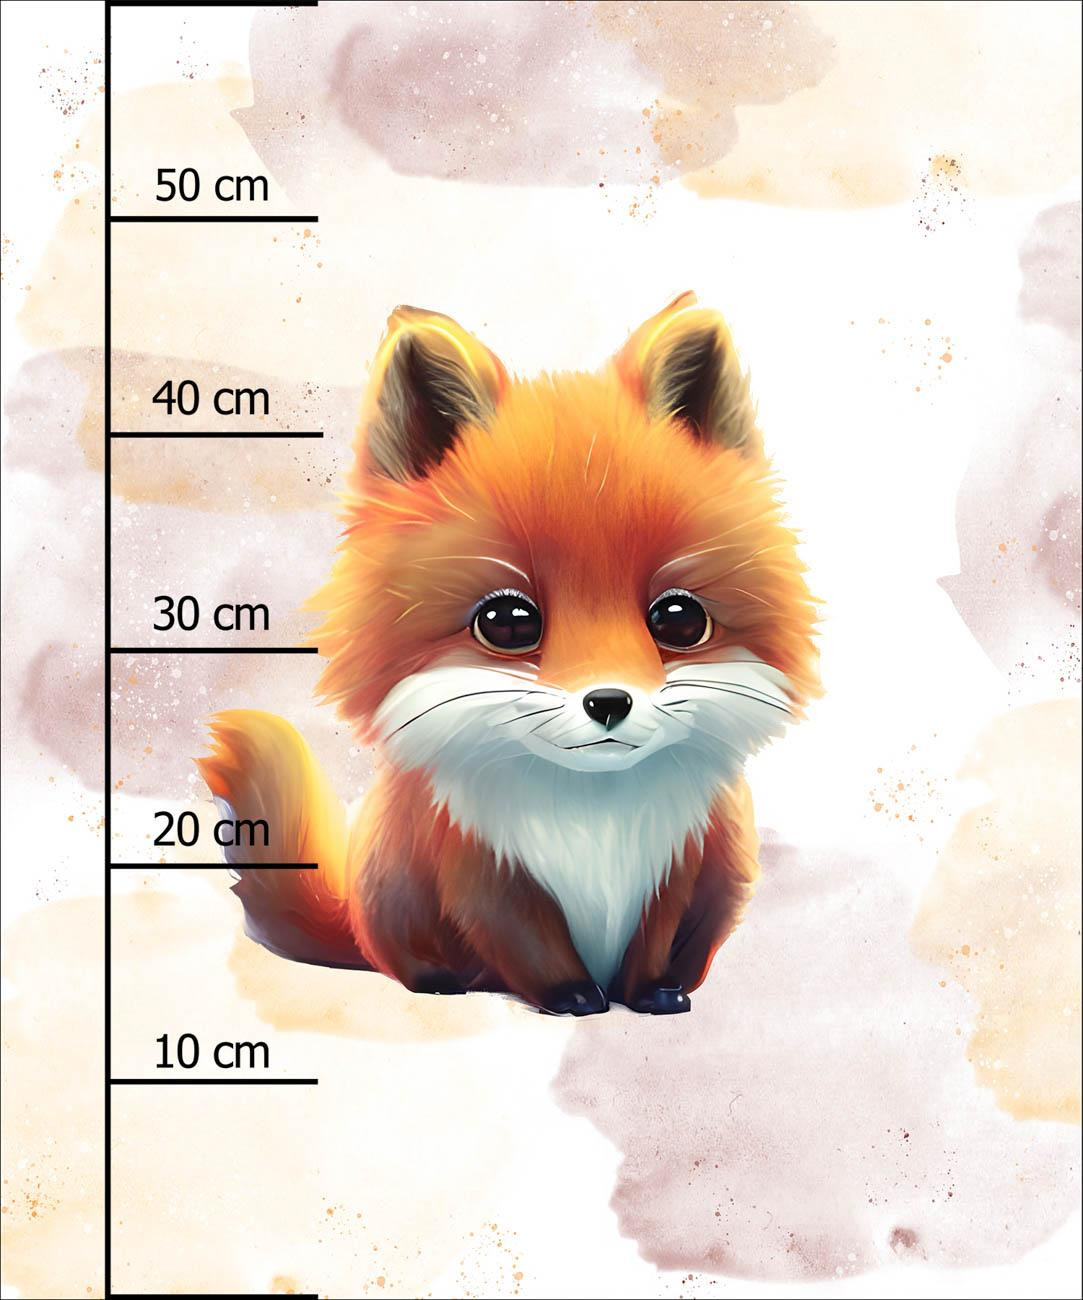 BABY FOX - PANEL (60cm x 50cm) tkanina wodoodporna